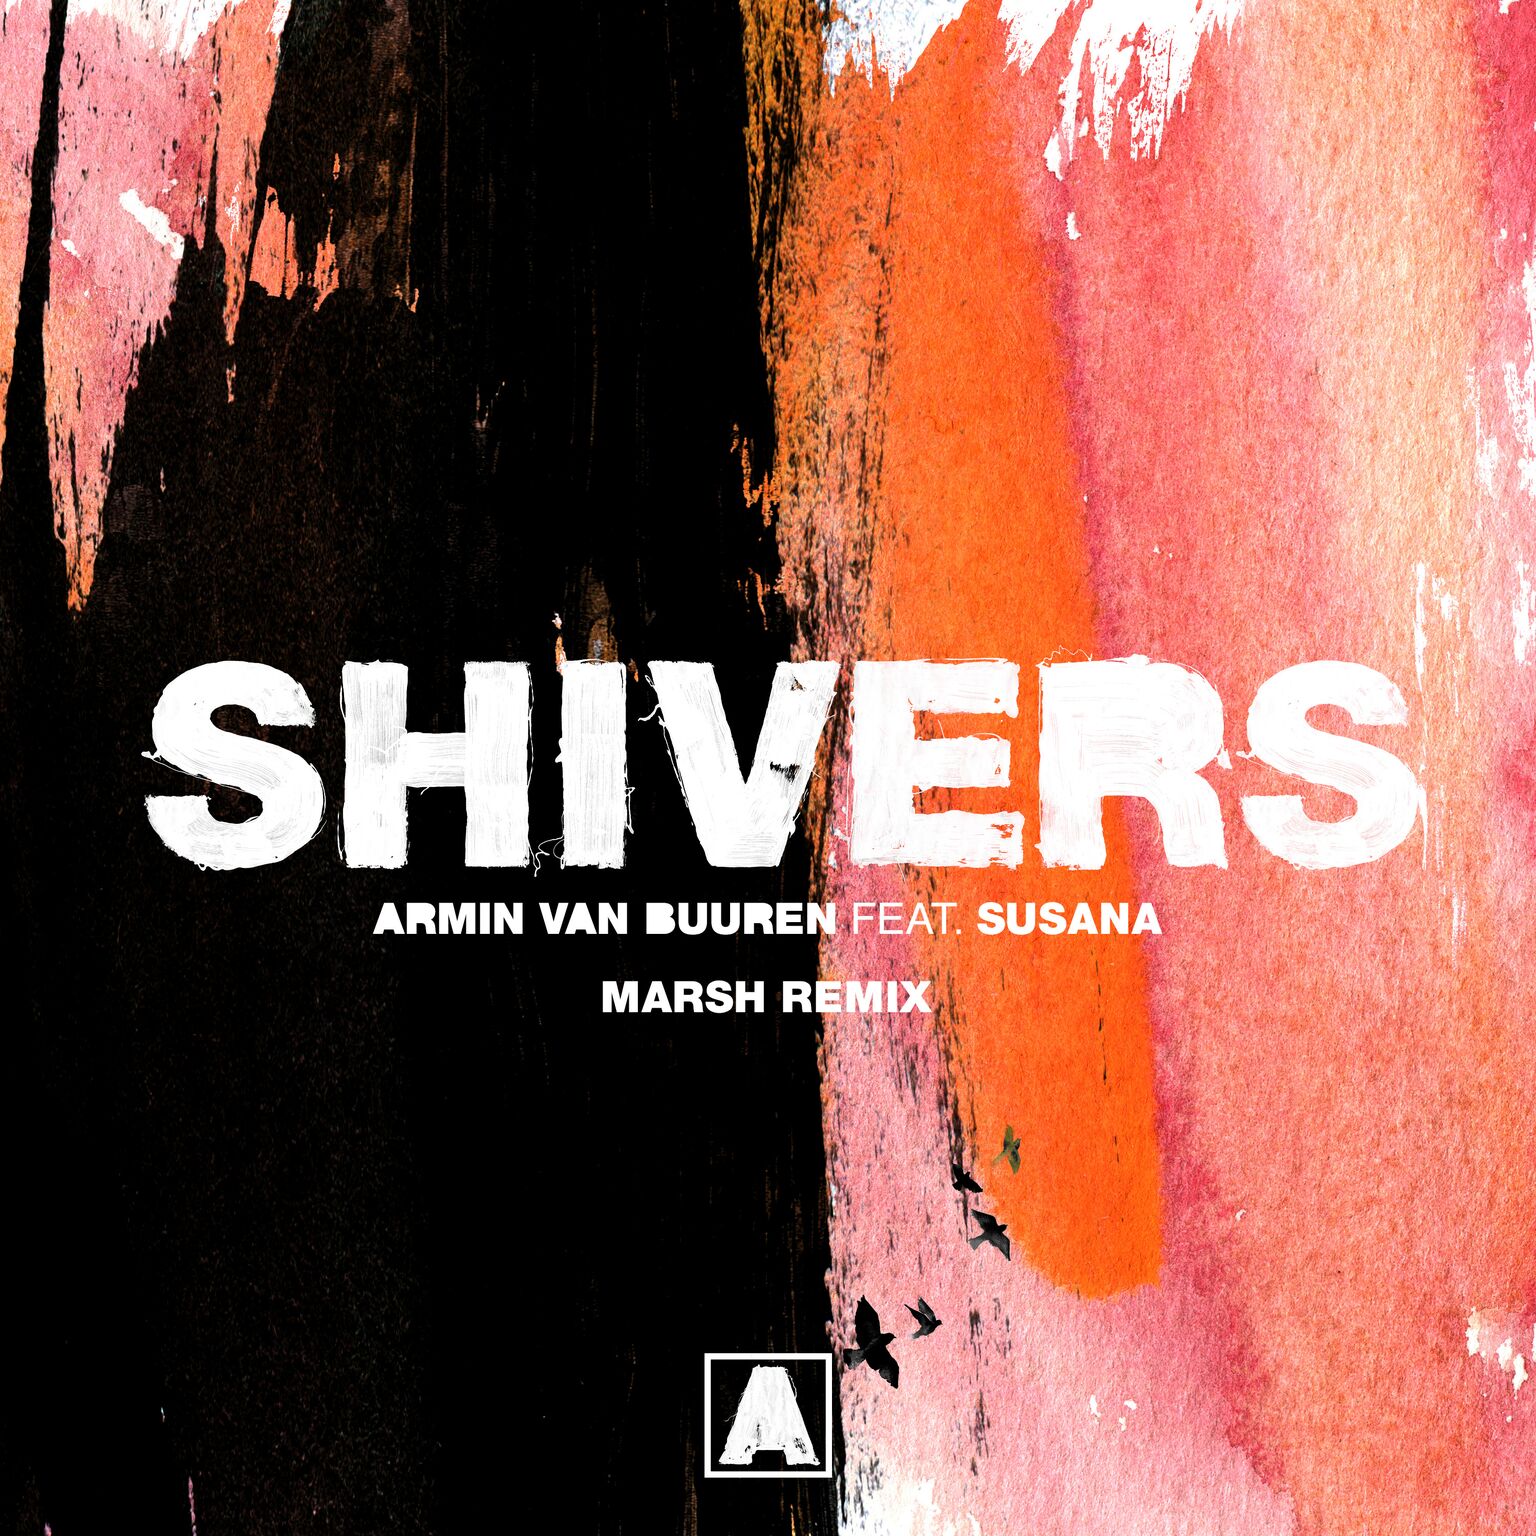 Armin van Buuren feat. Susana presents Shivers (Marsh Remix) on Armind